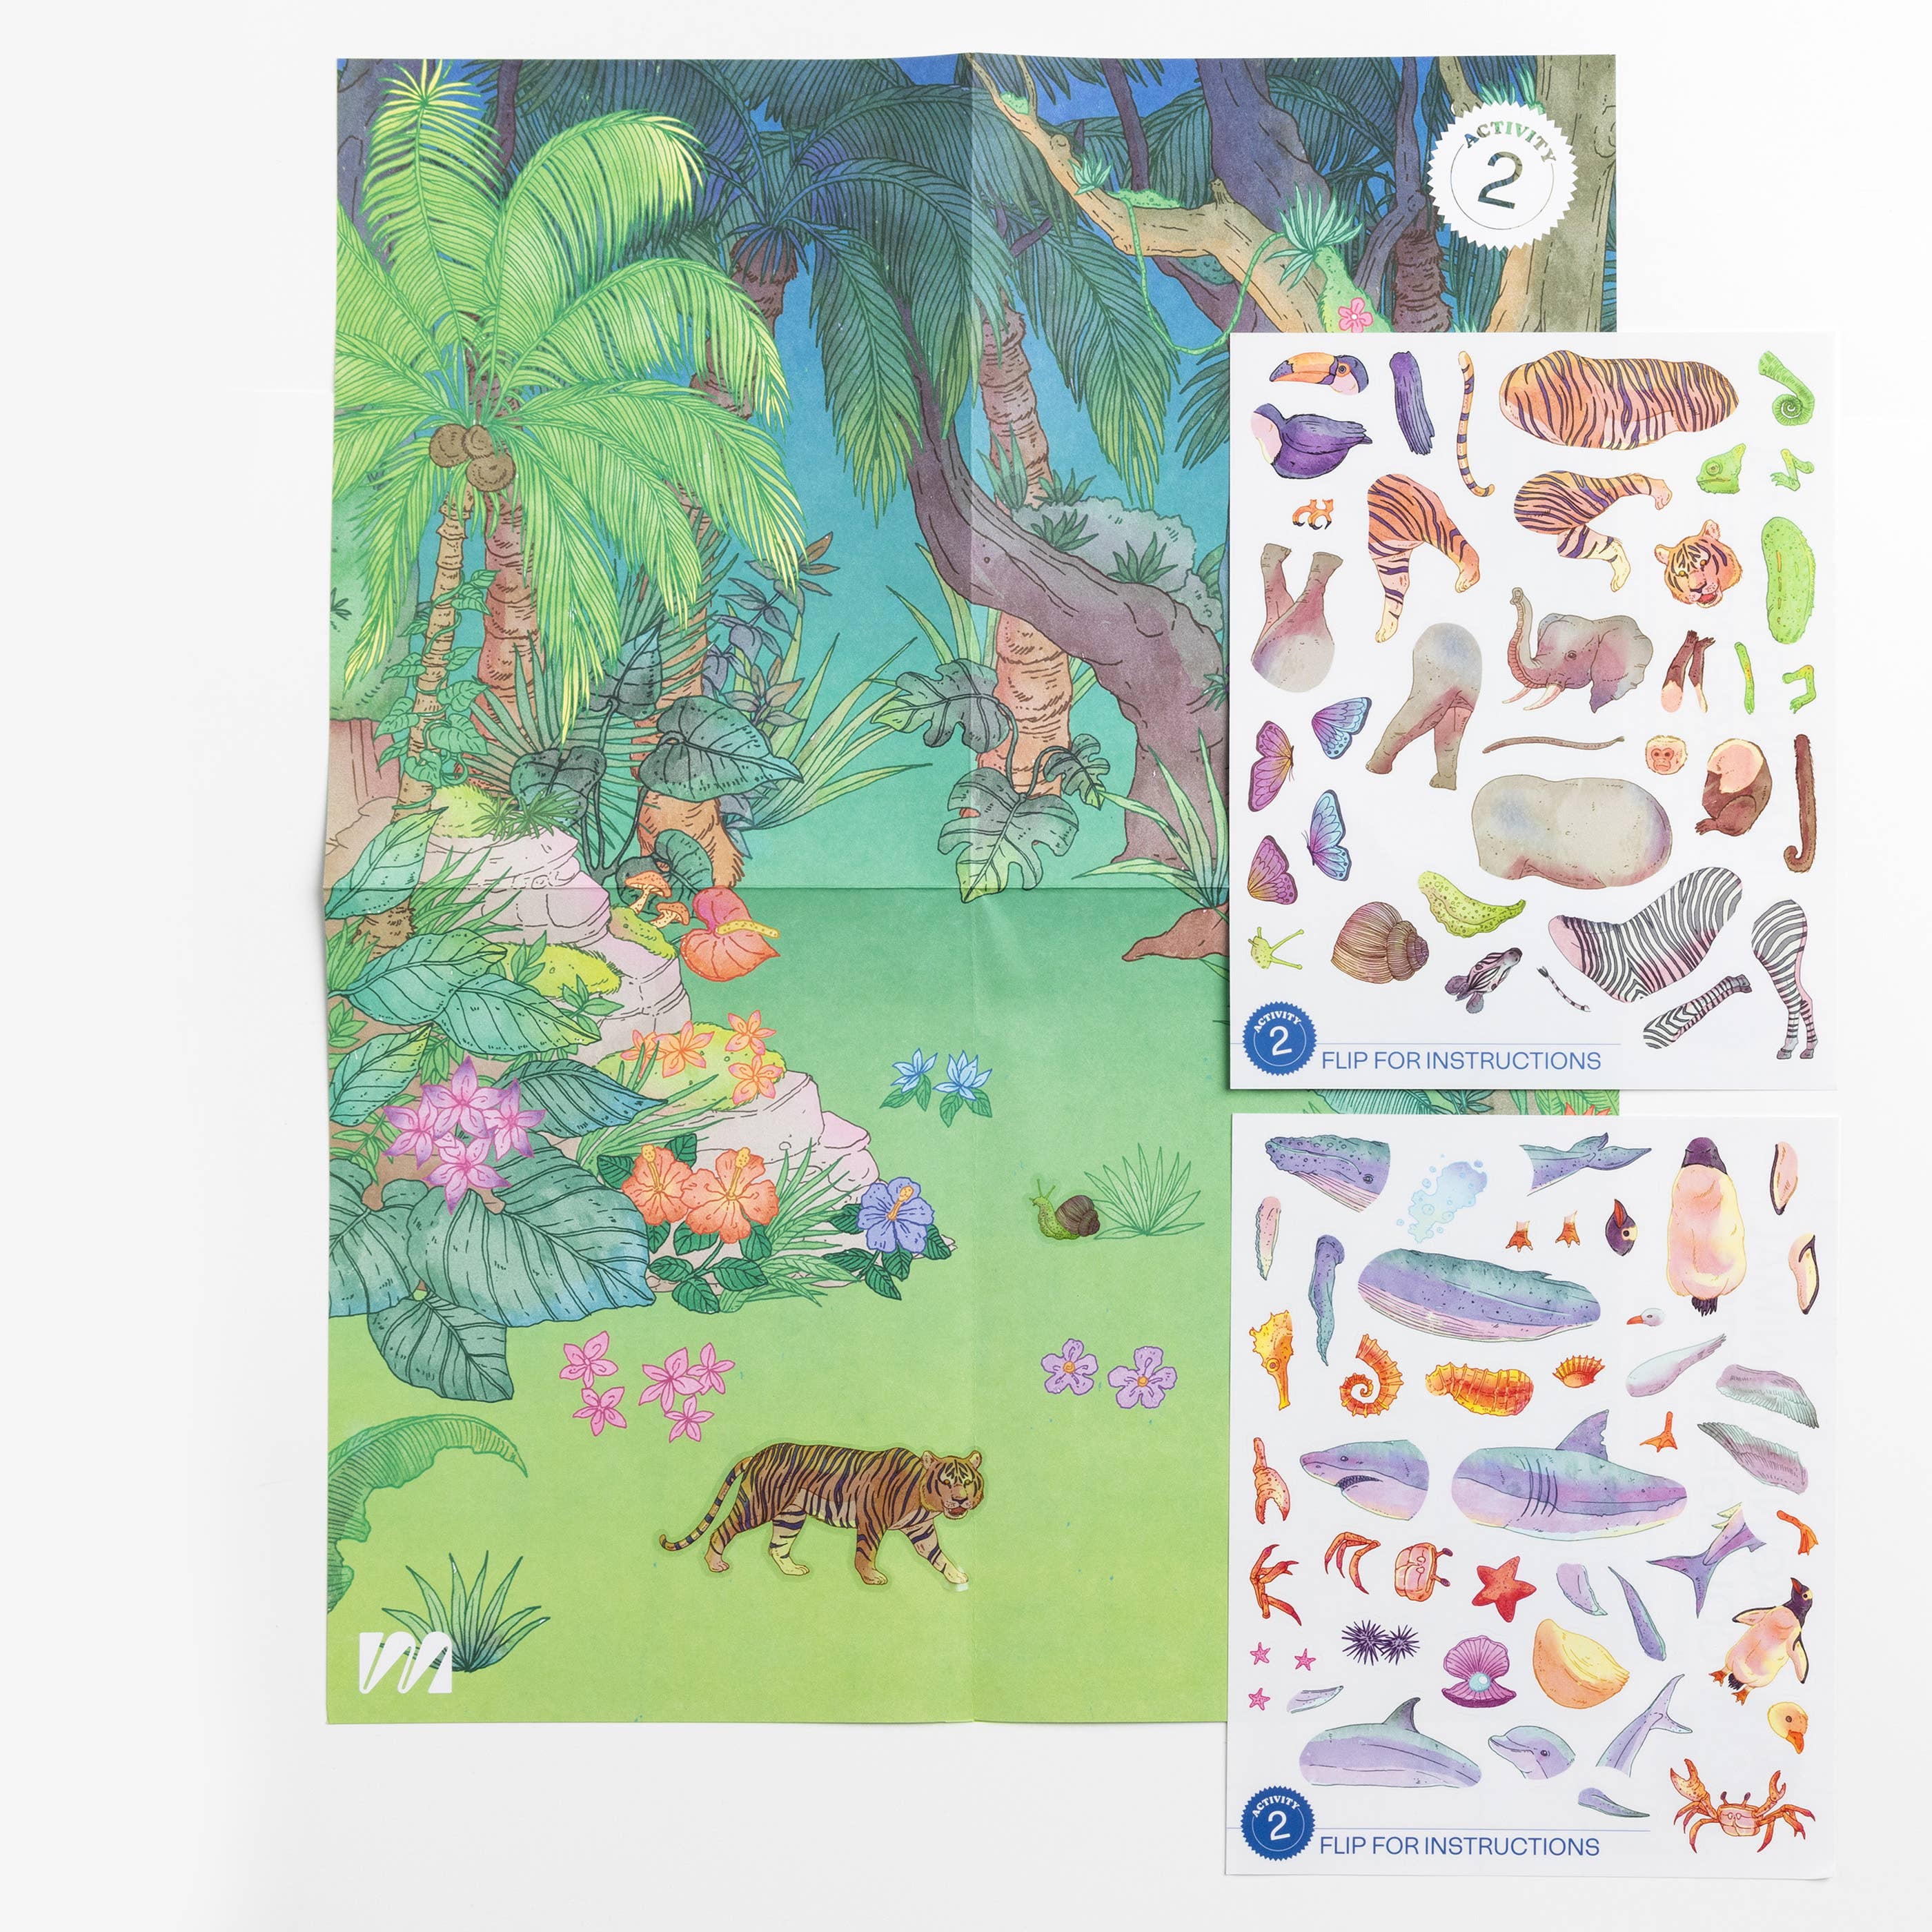 VOL ⑦ — ANIMAL Sticker Based Art Pack